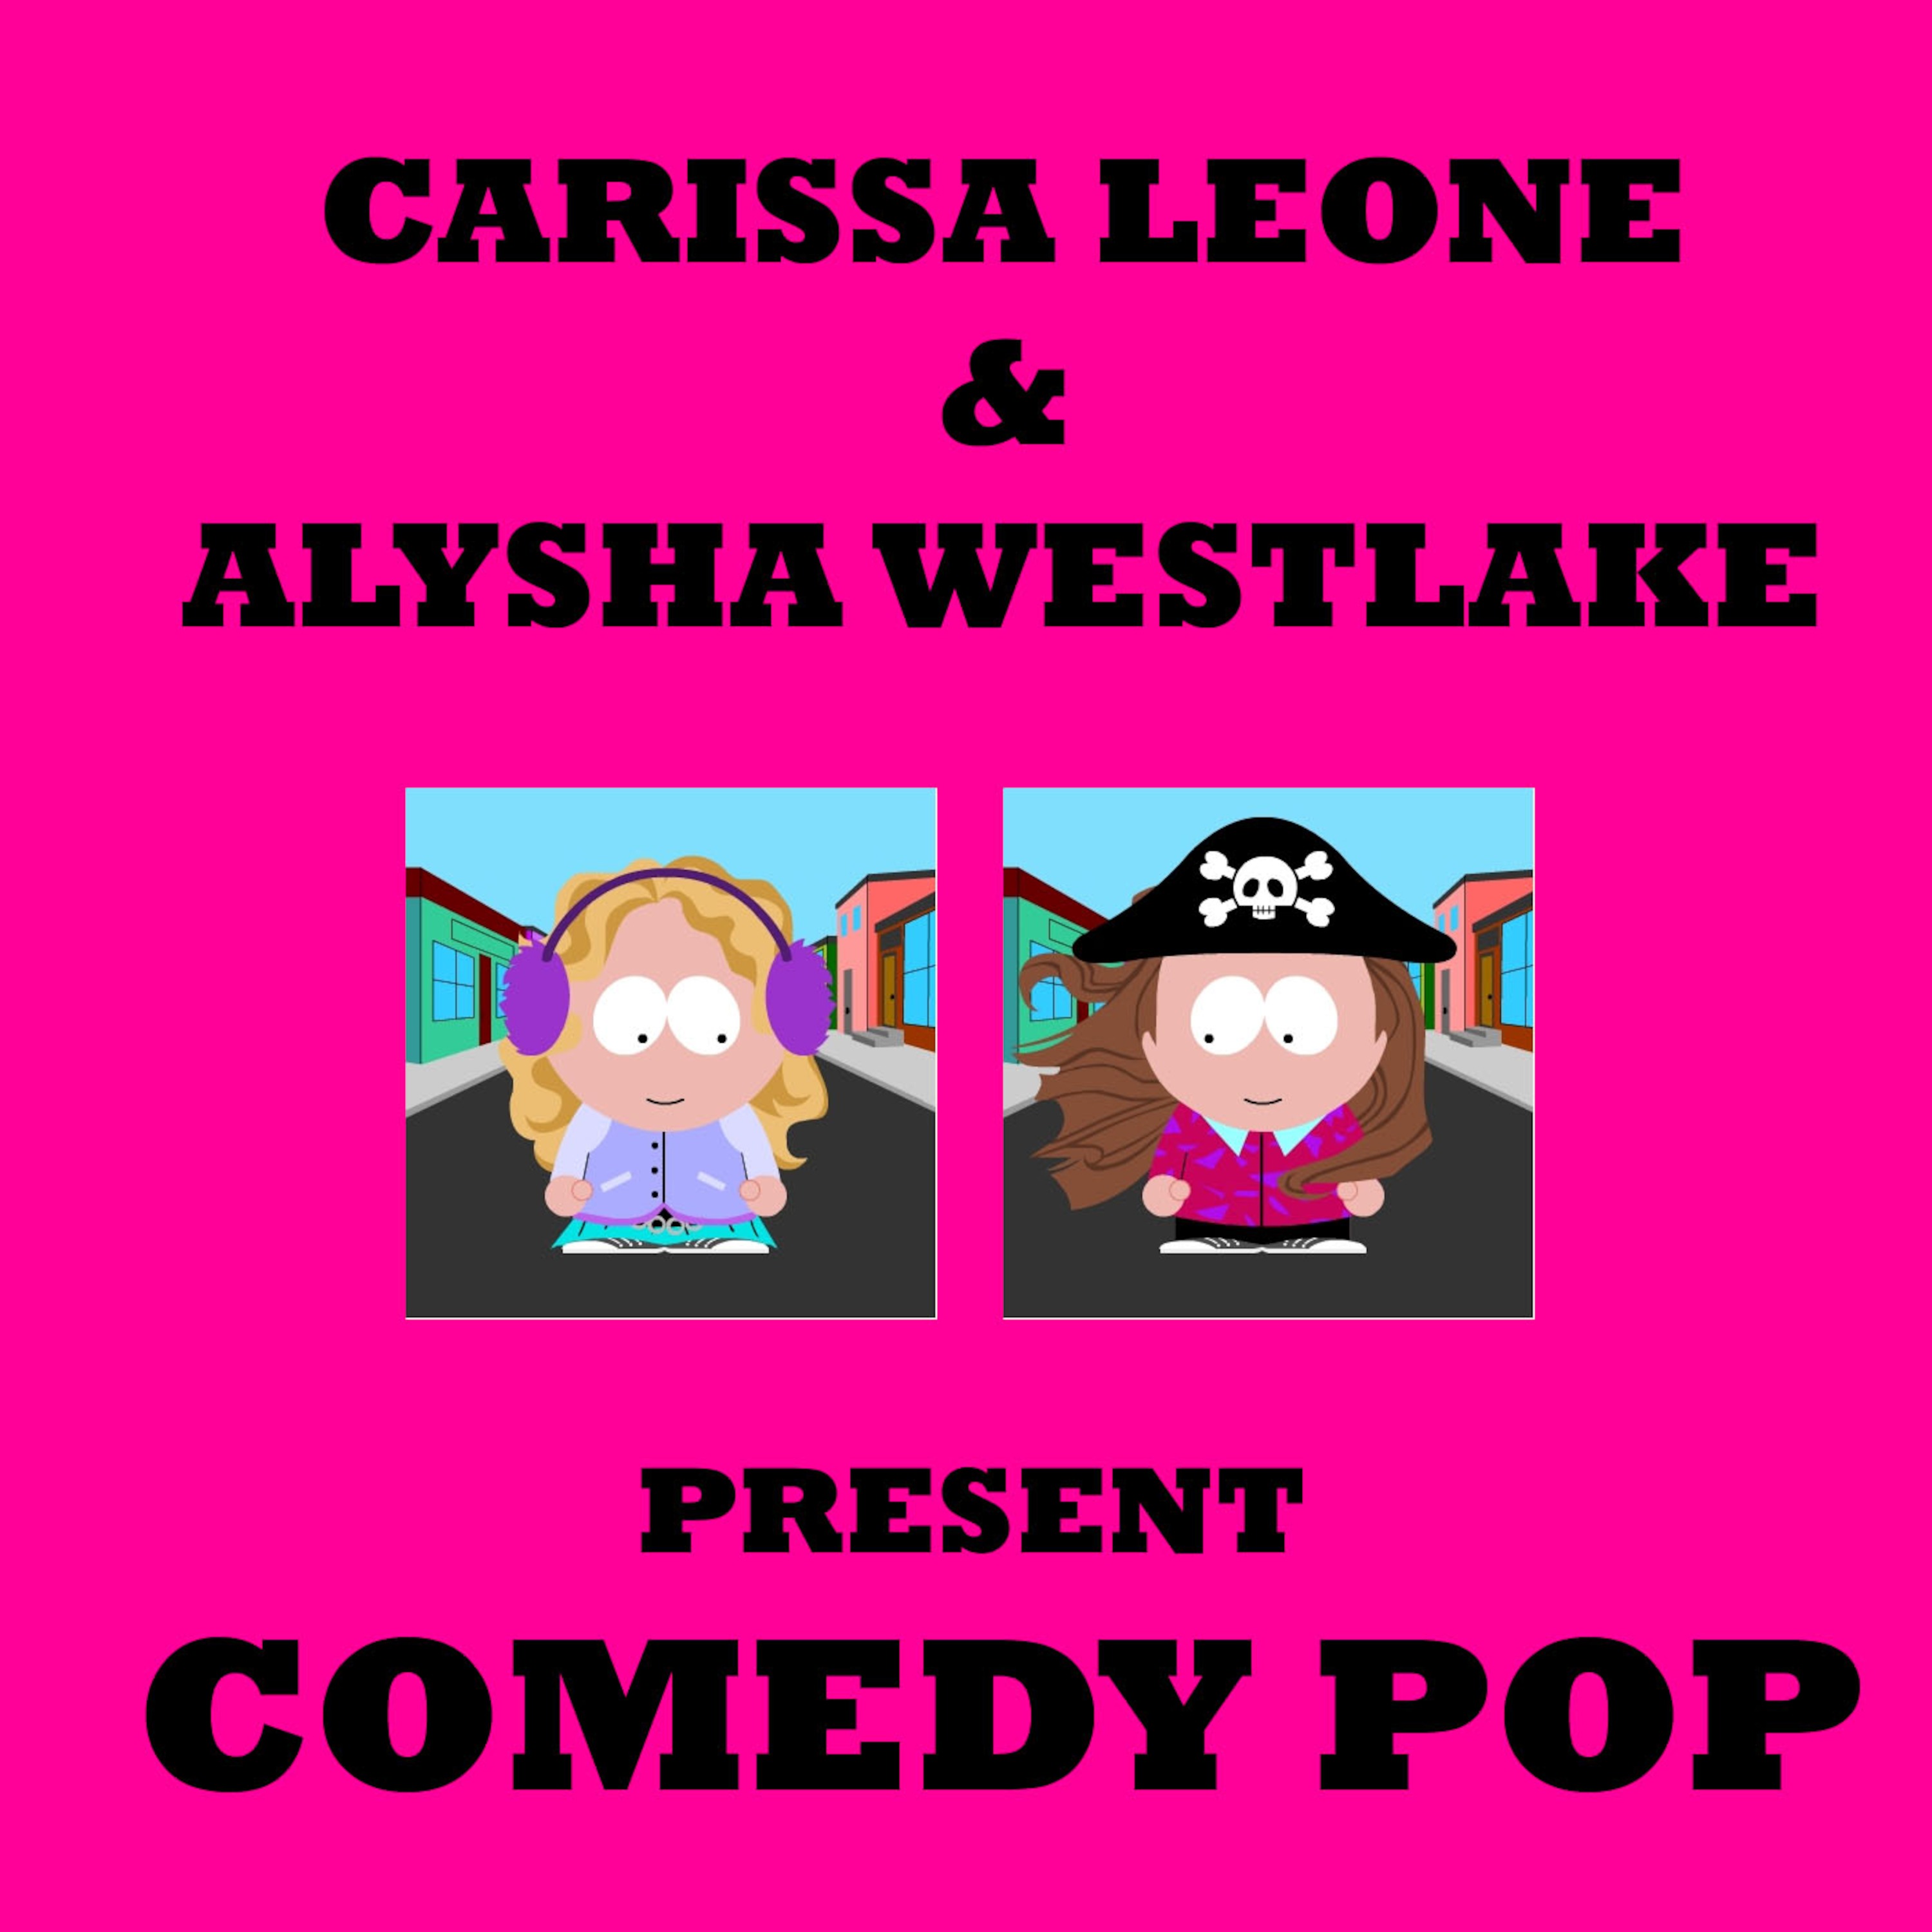 Leone & Westlake's Comedy Podcast